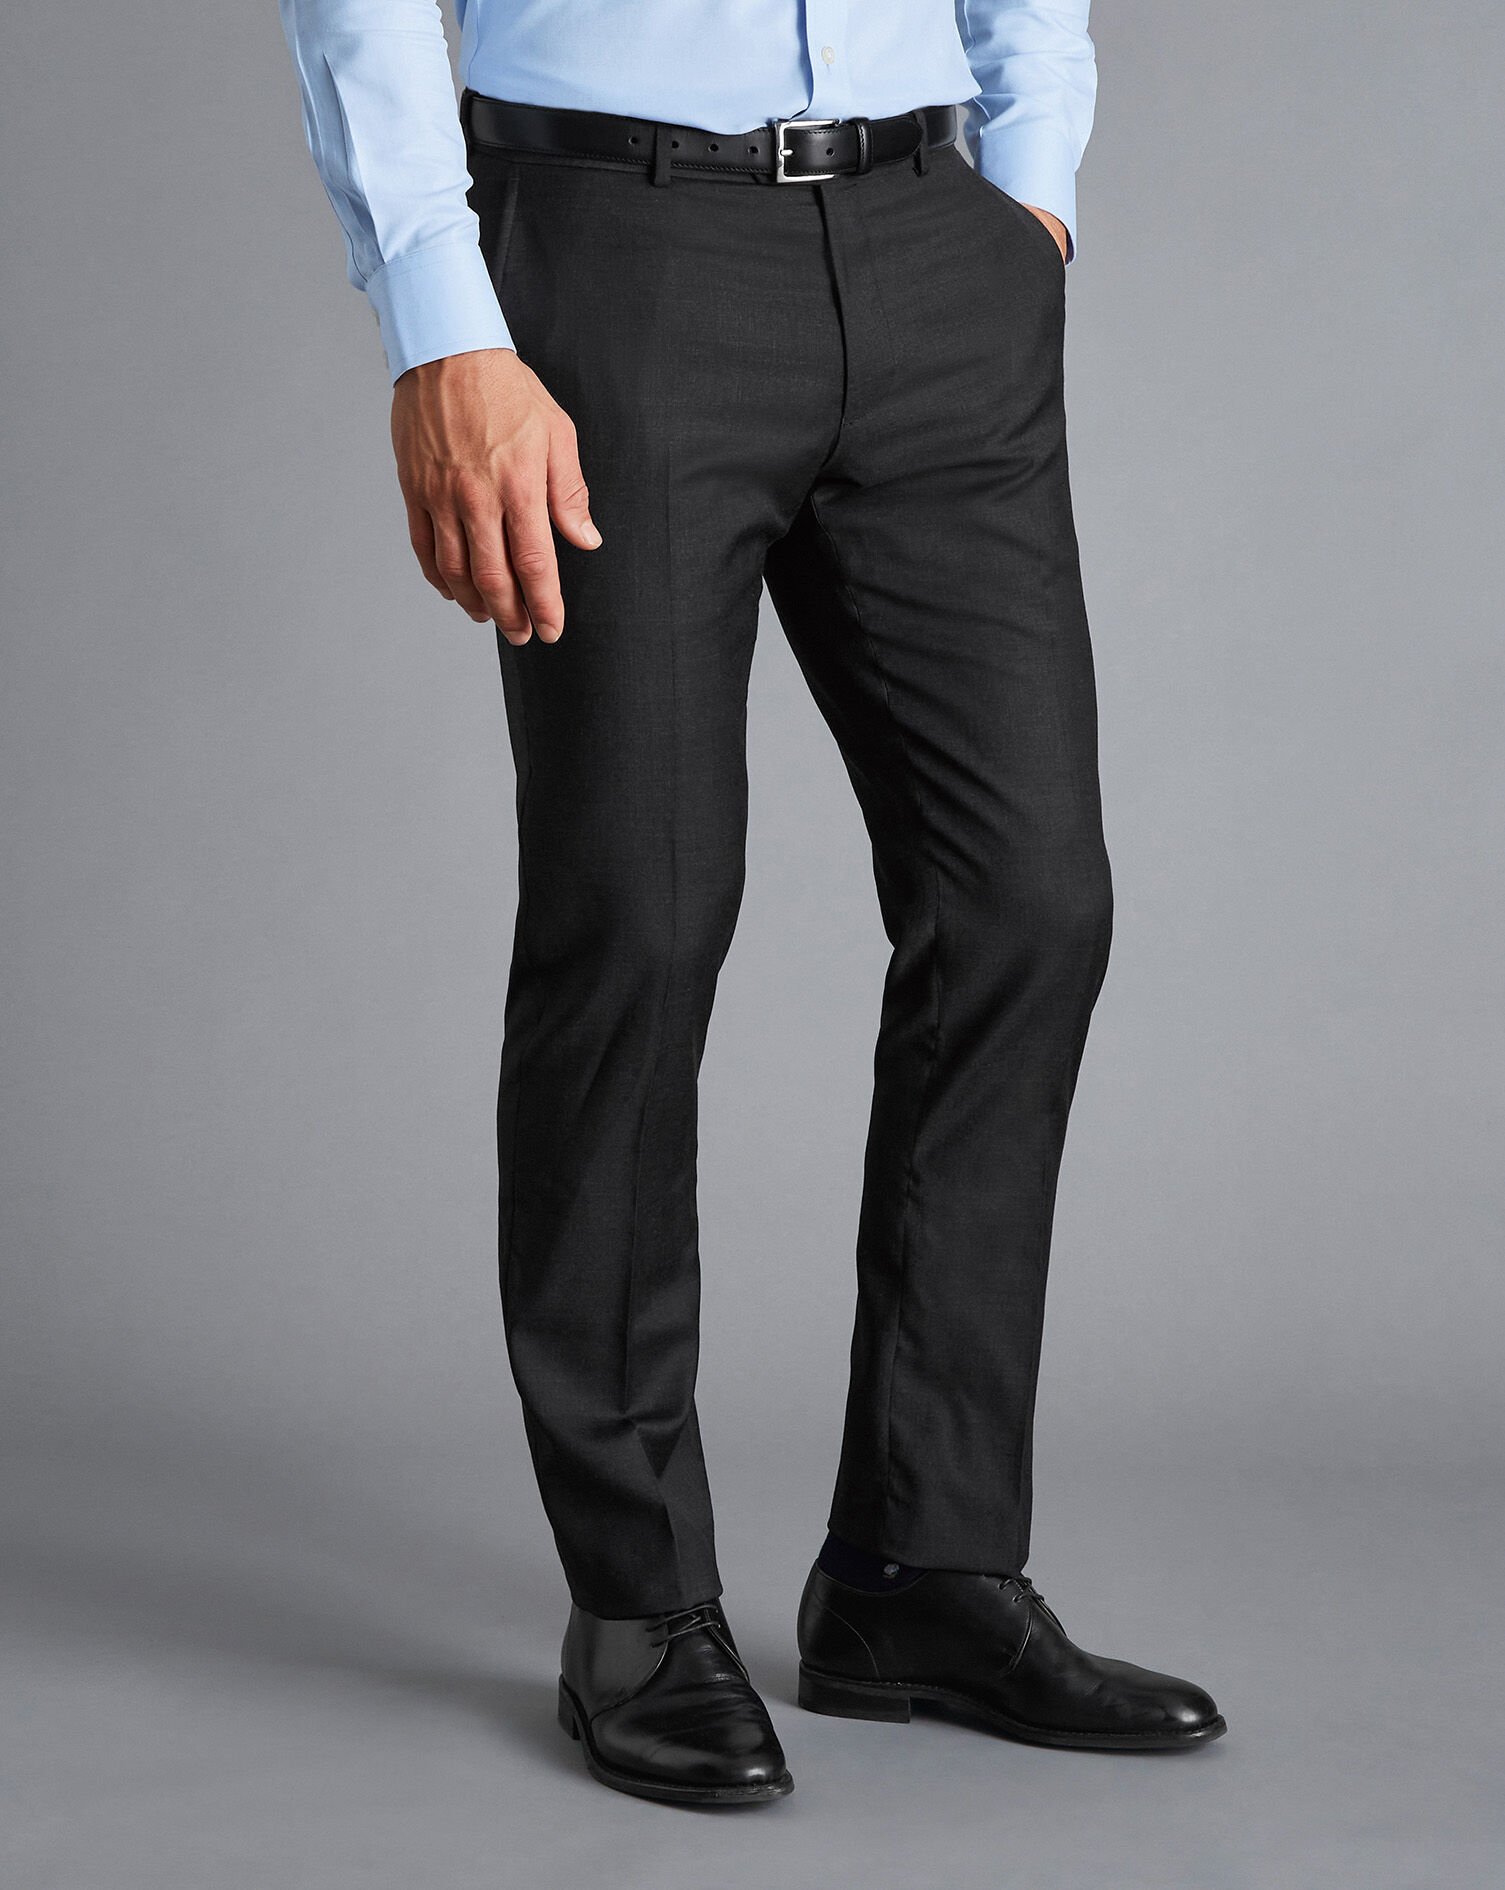 10 Black Blazer Grey Pants Styles For Men  The Versatile Man